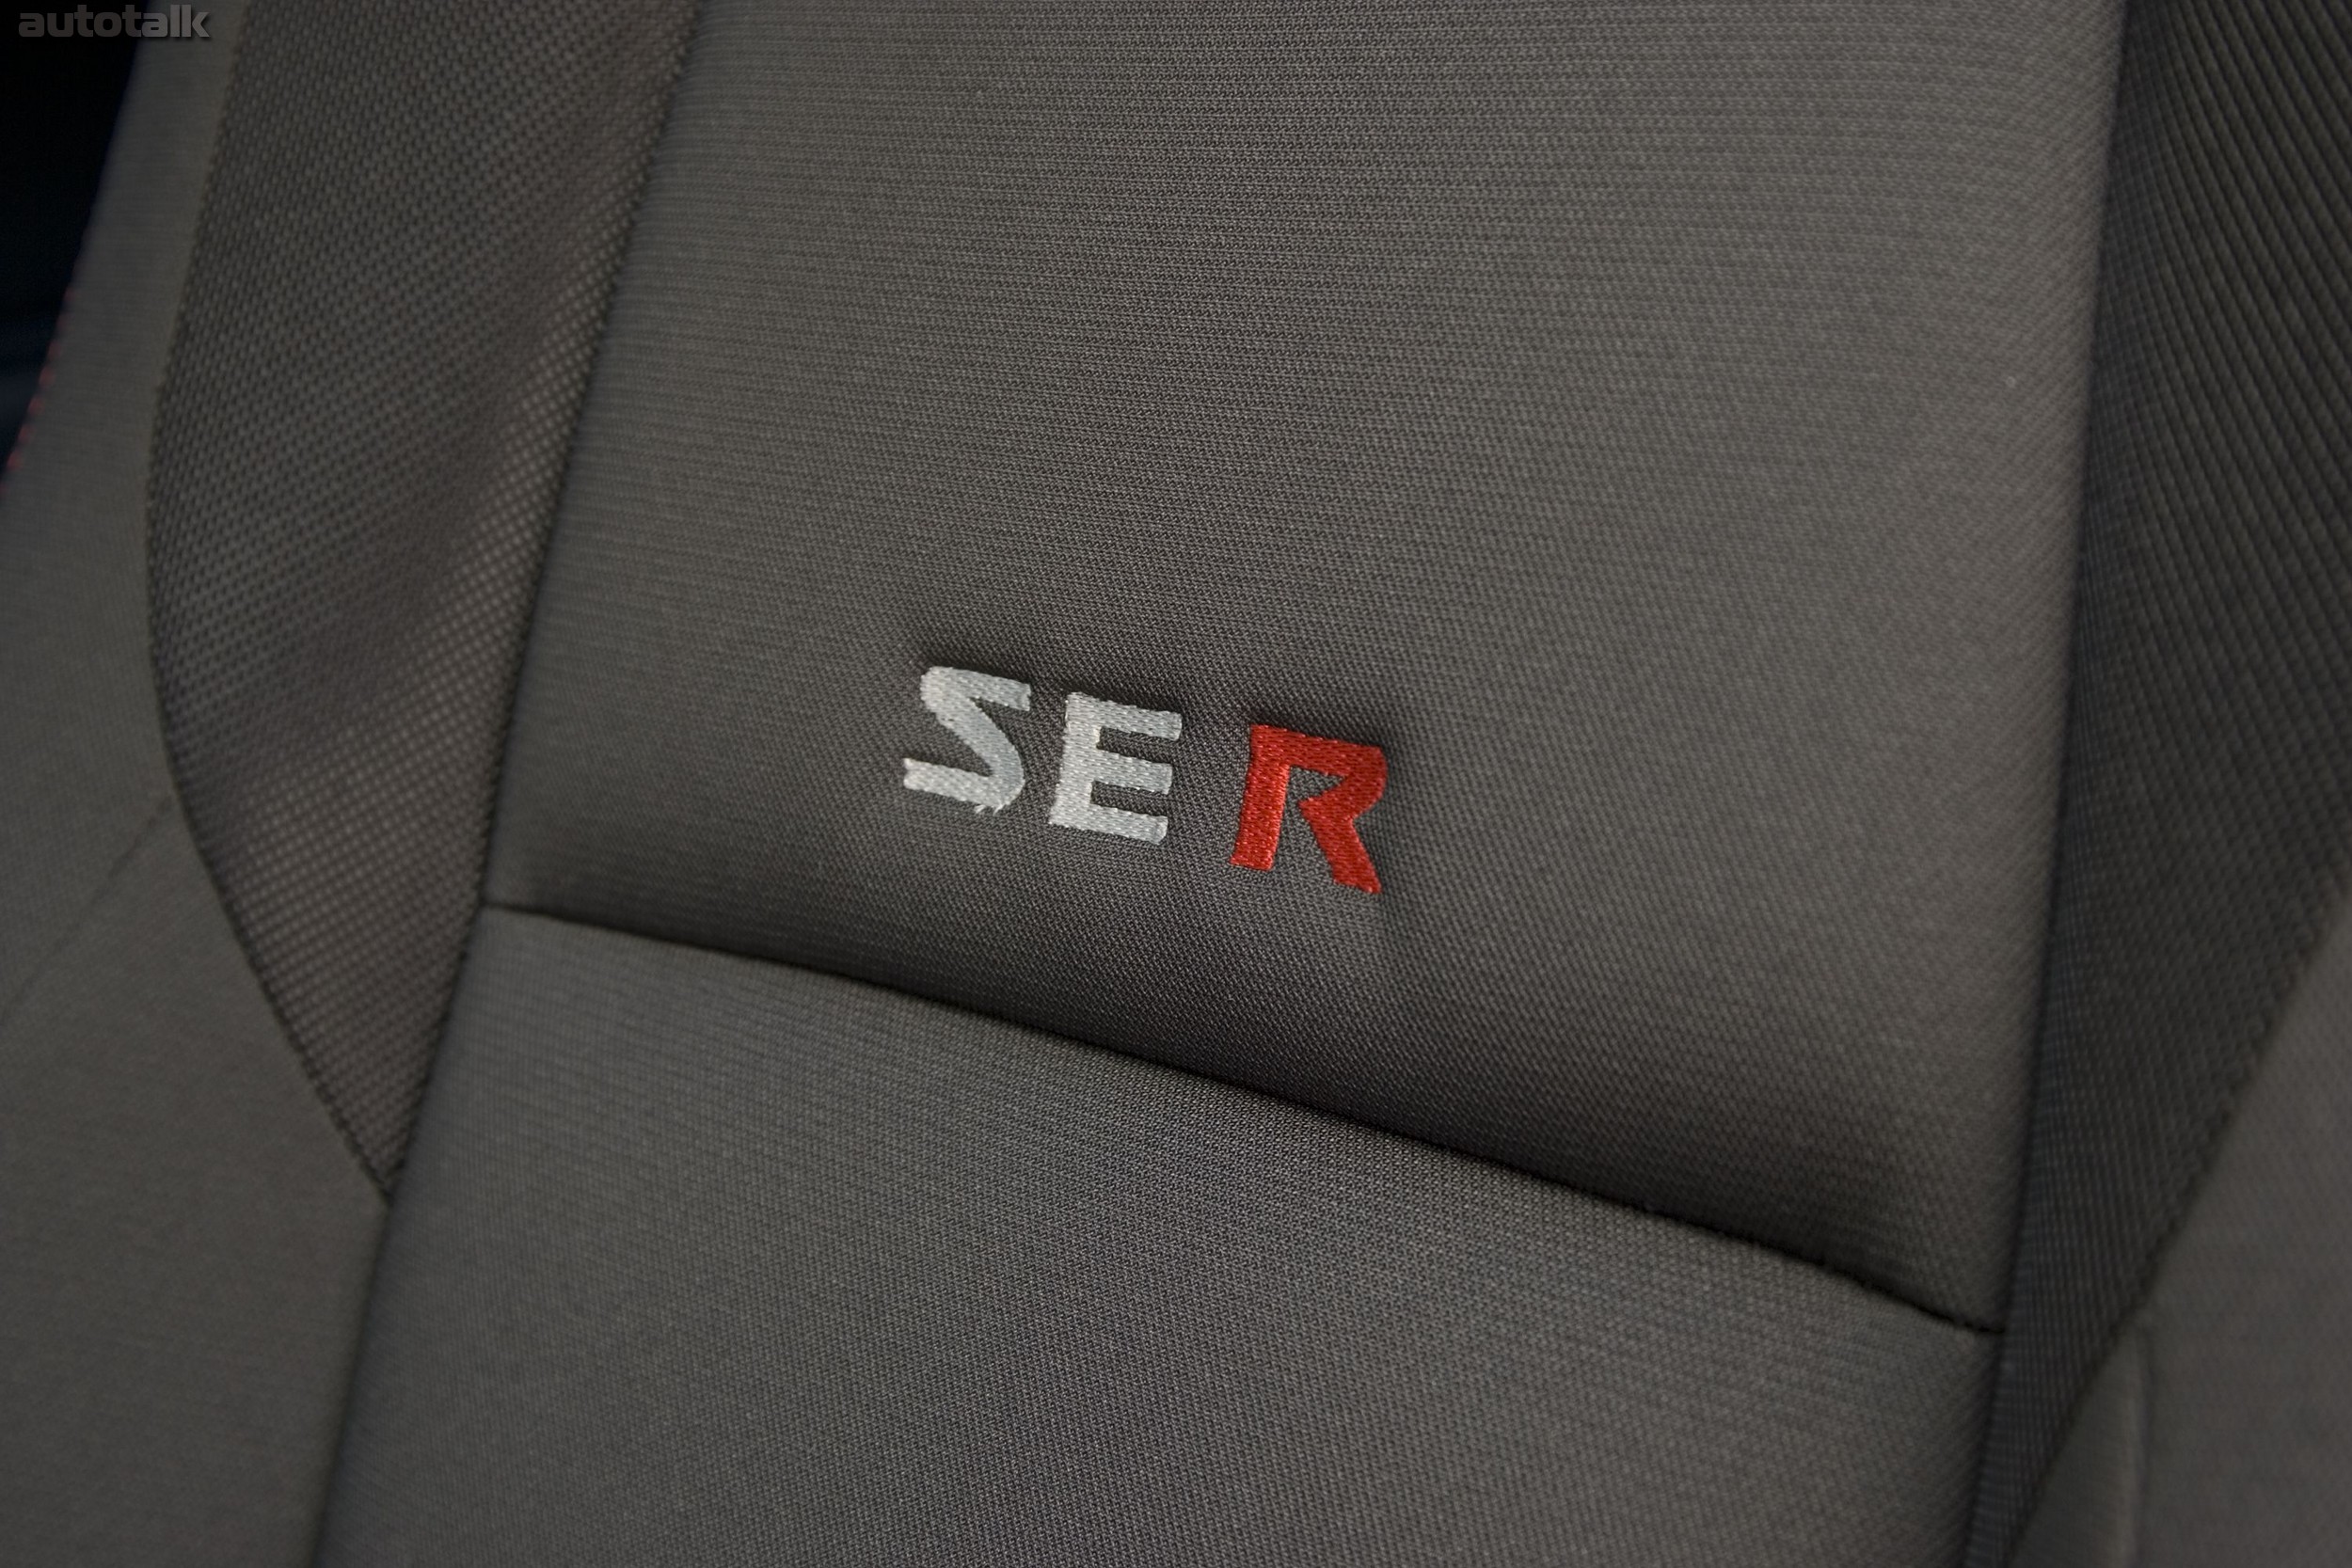 2010 Nissan Sentra SE-R